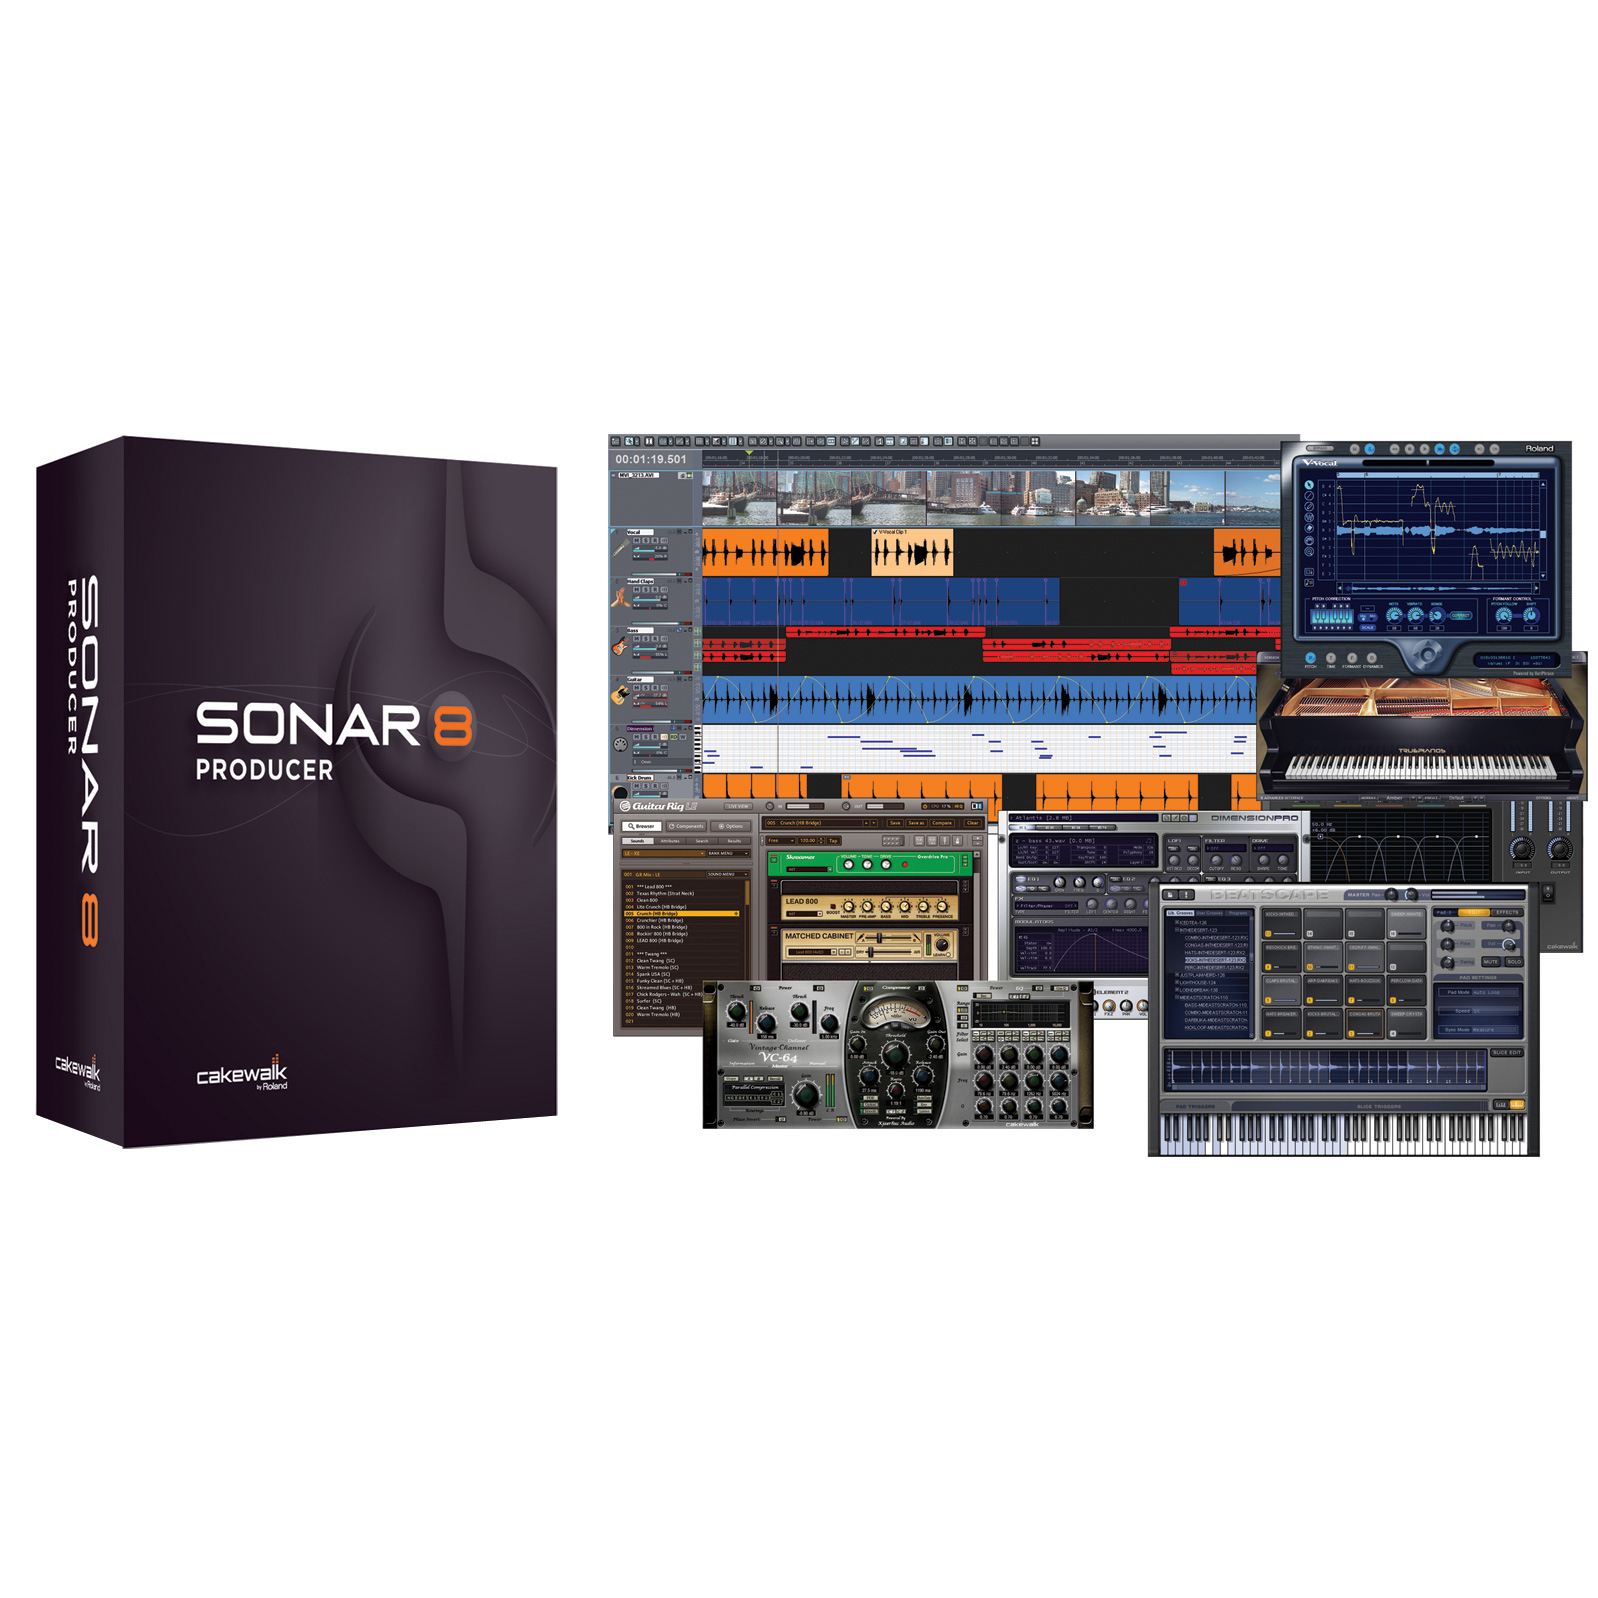 sonar producer 8.5